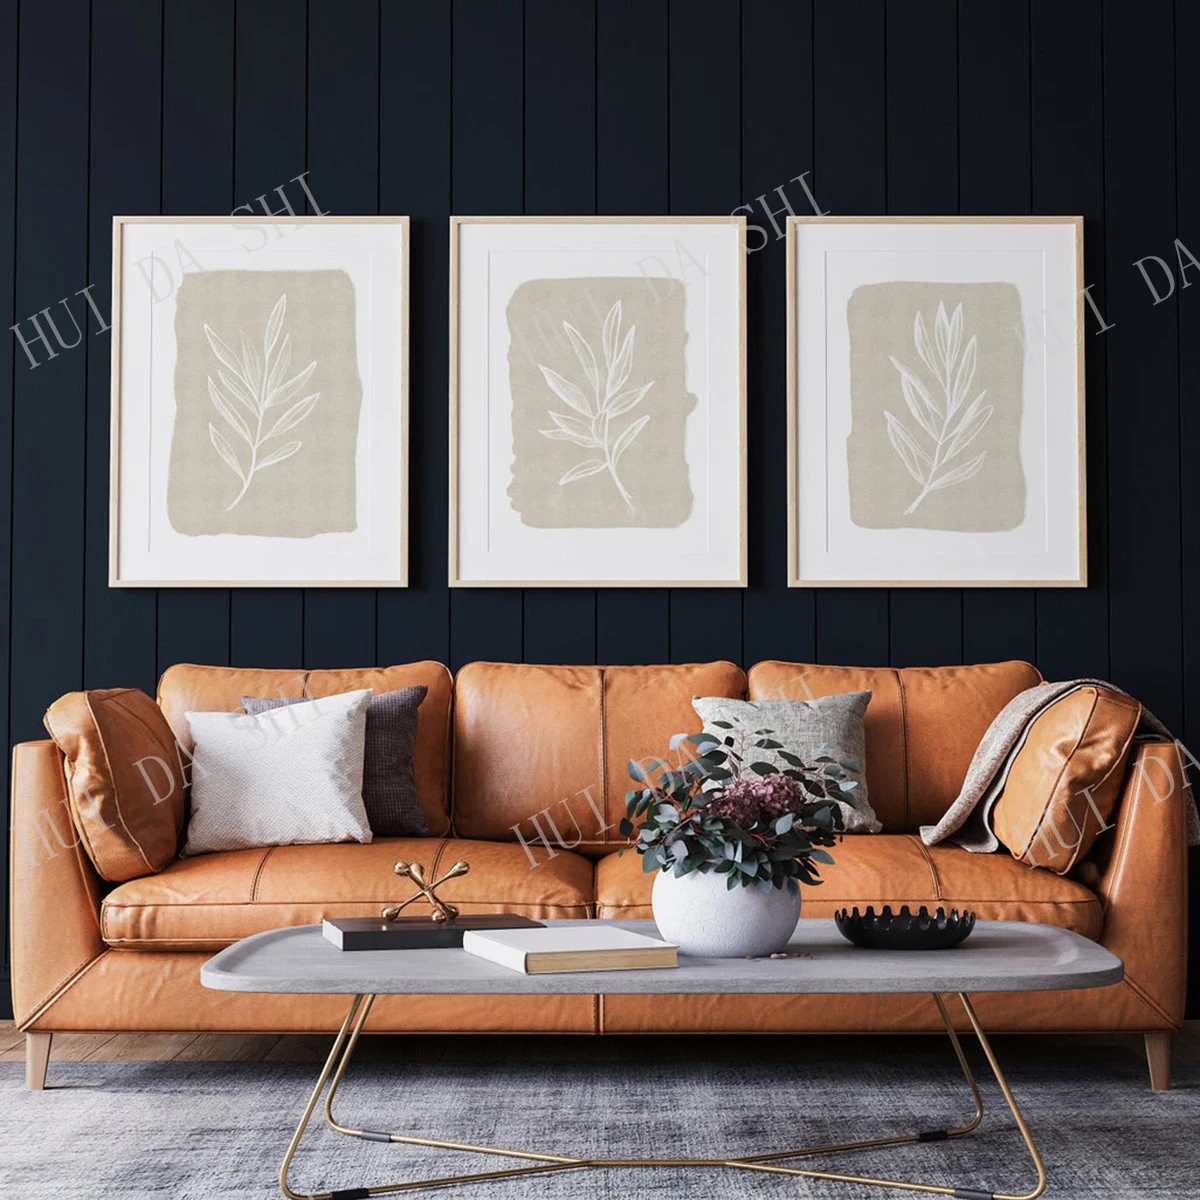 

Set of 3 prints, Gallery wall art, printable wall art, Botanical leaf line drawing, neutral wall decor, modern beige print